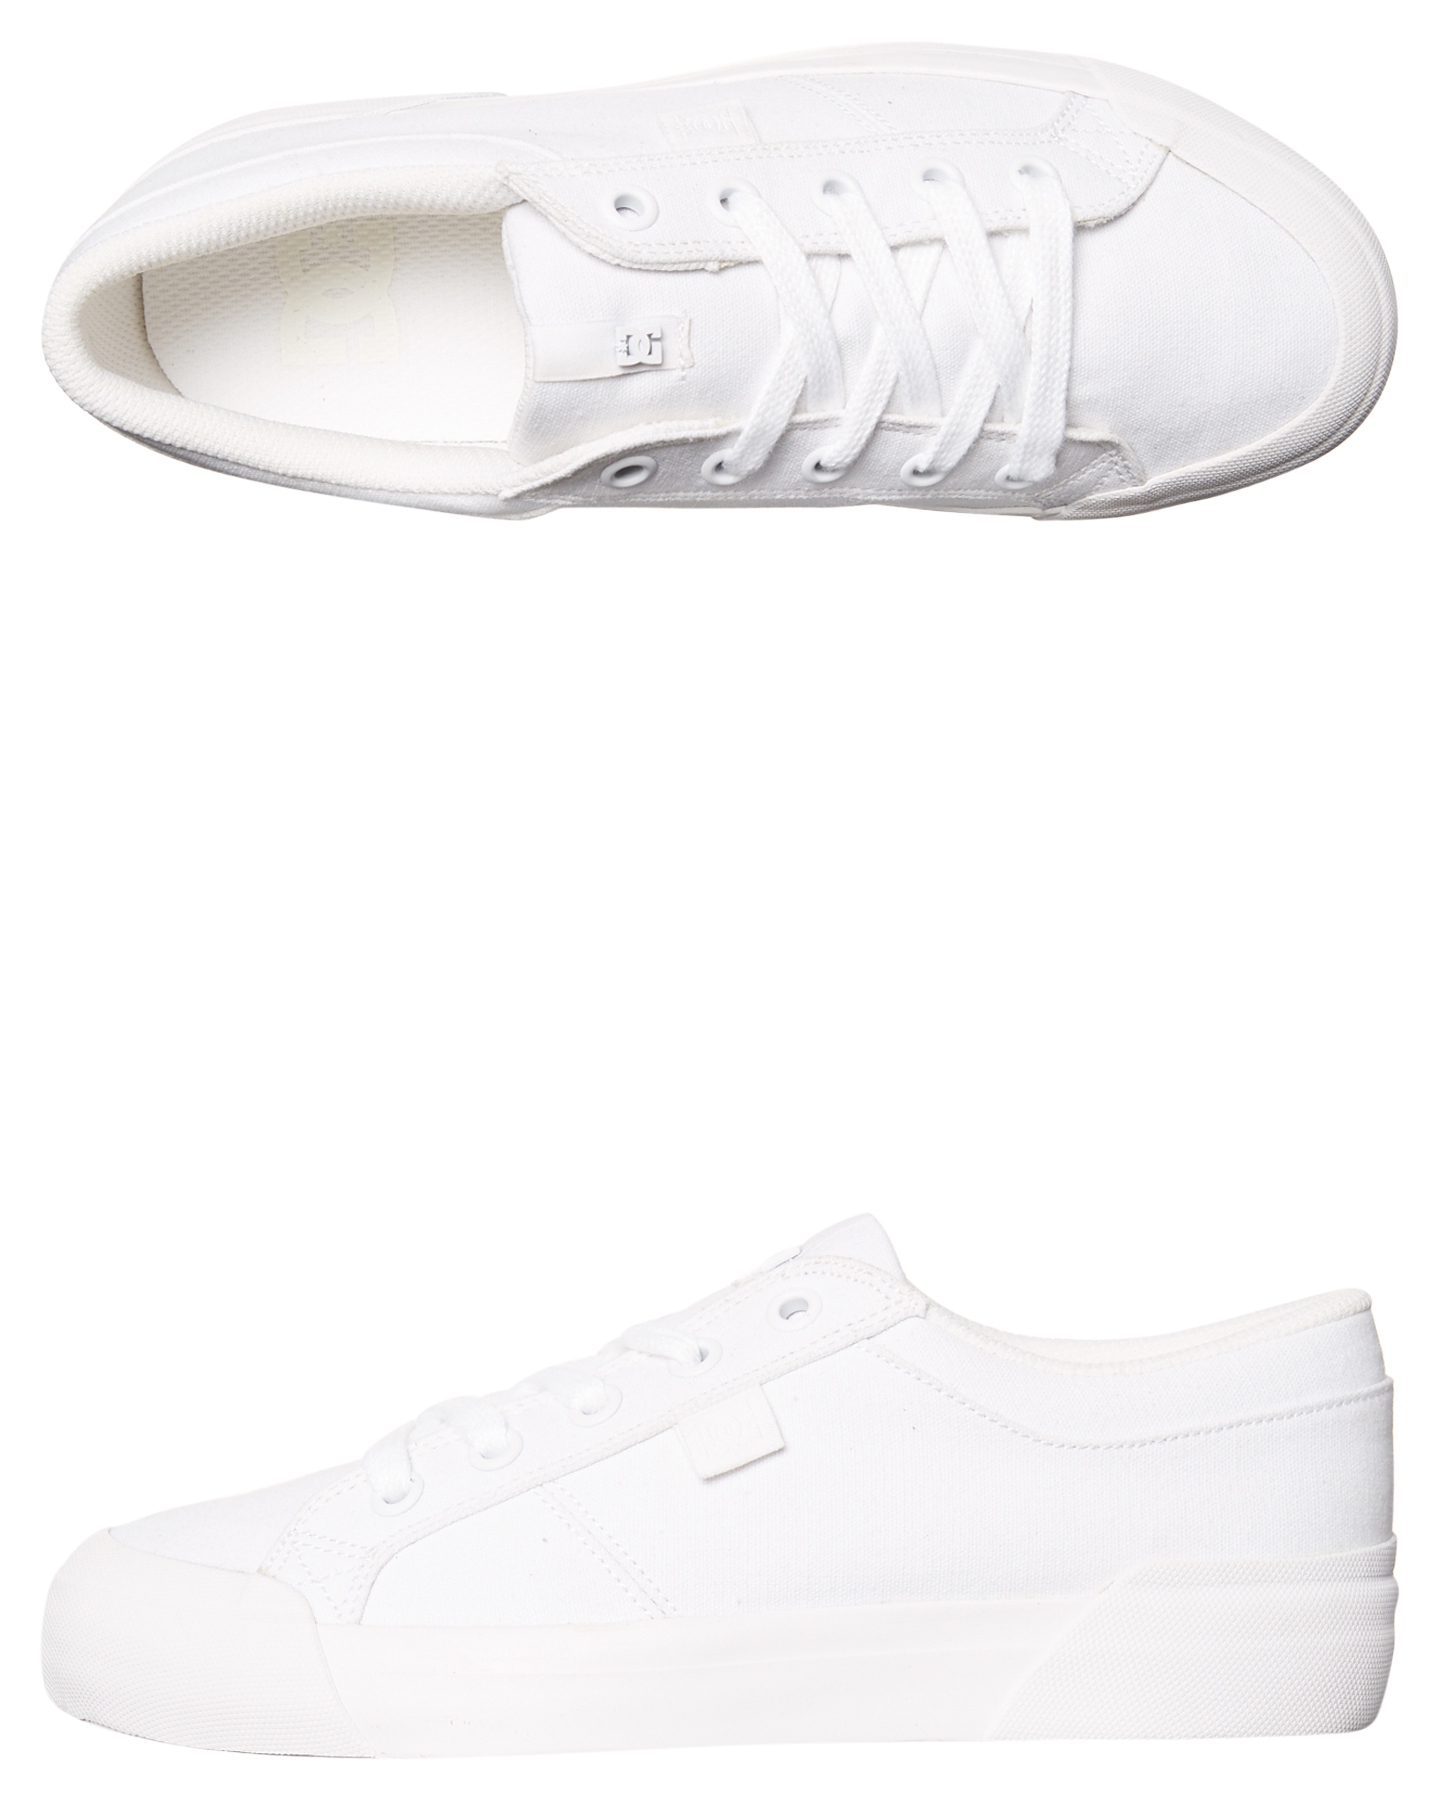 Dc Shoes Womens Danni Tx Shoe - White 